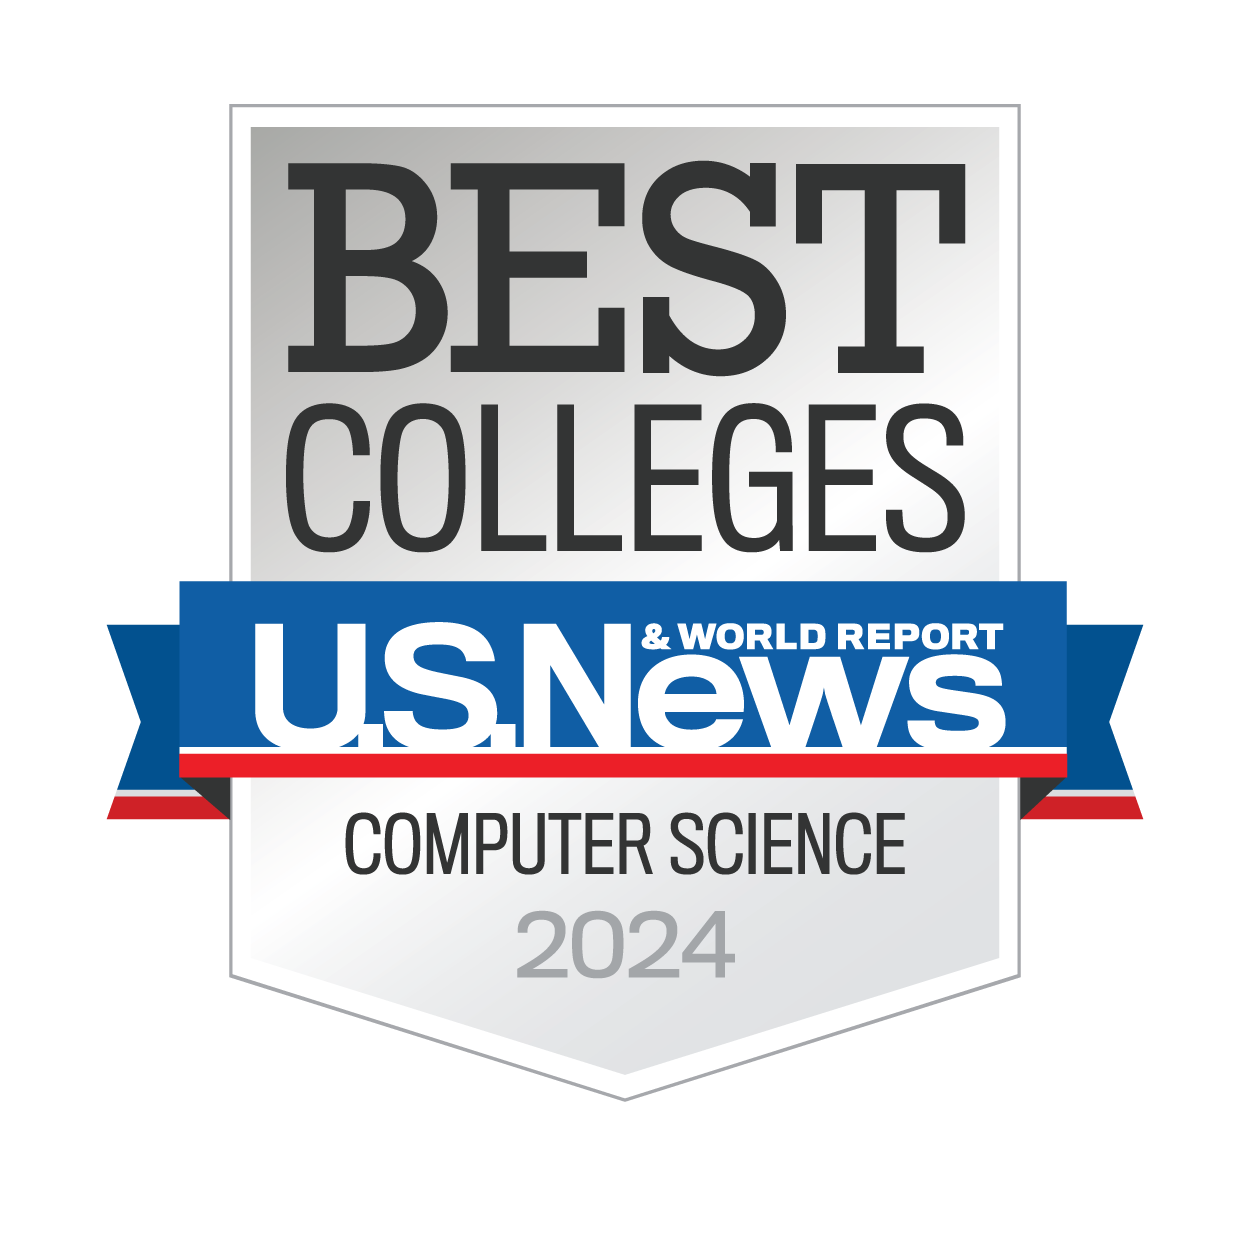 computer science 2024 badge